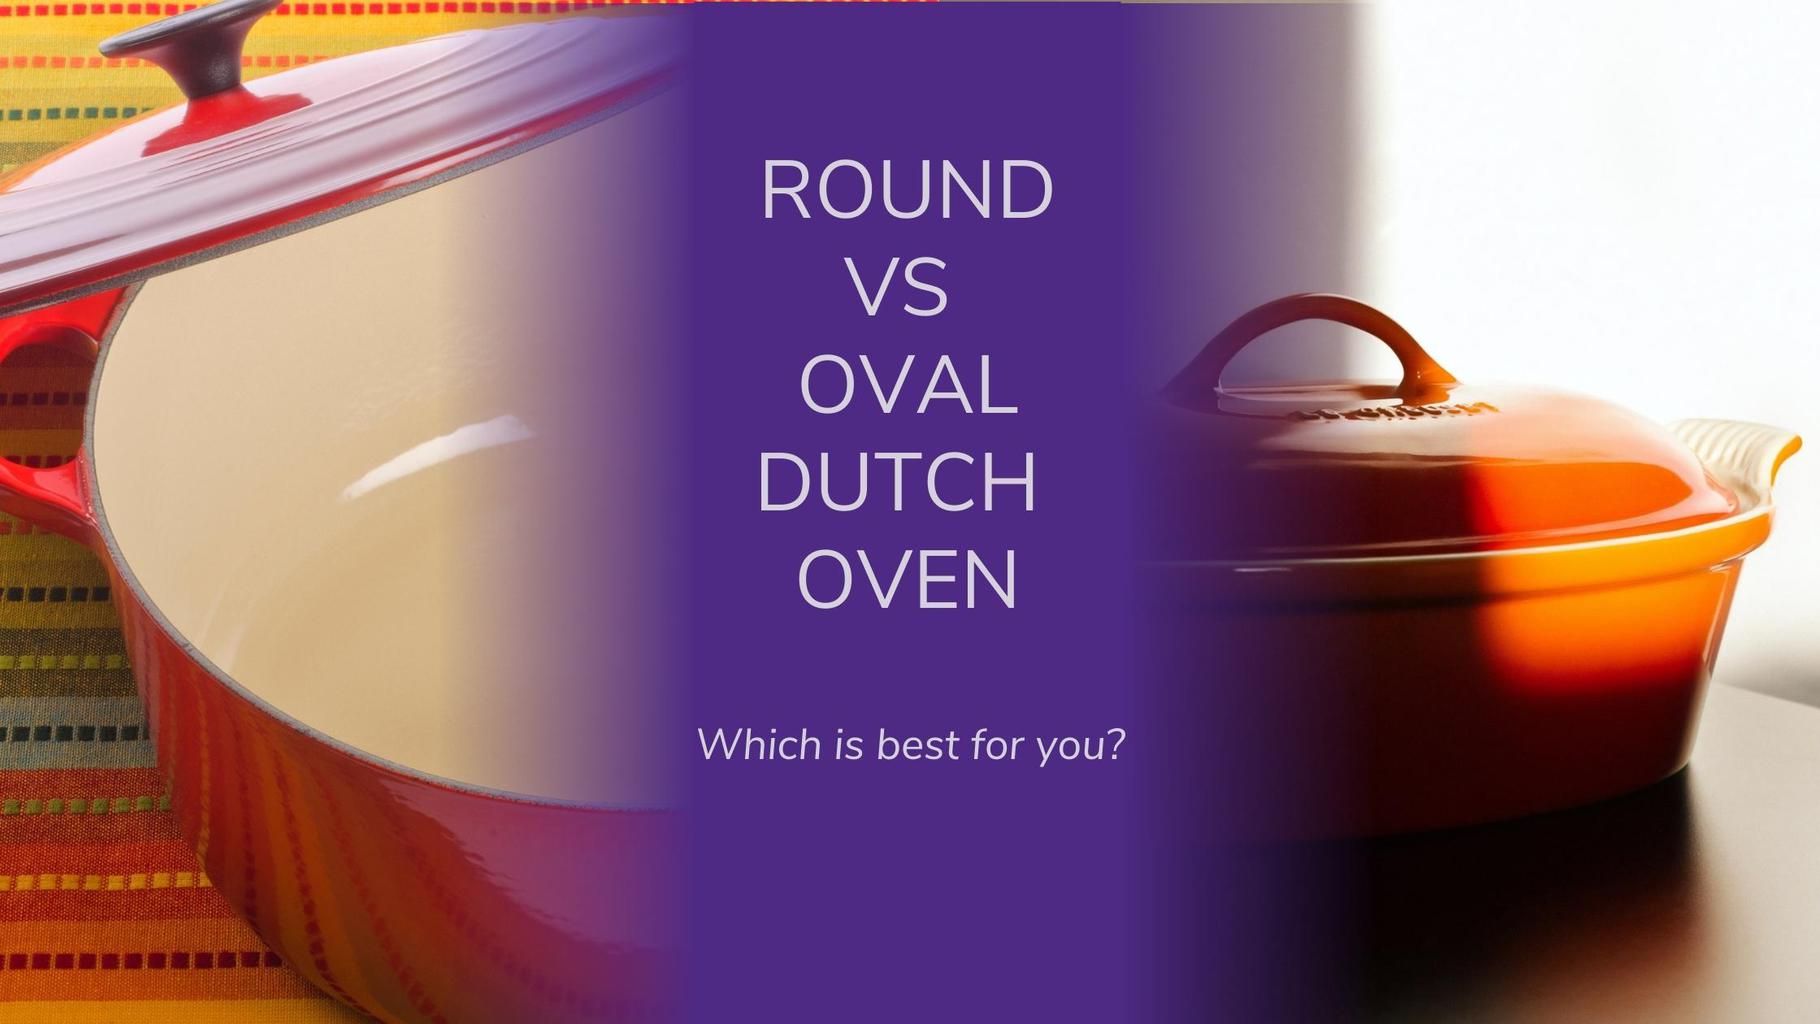 https://clankitchen.com/wp-content/uploads/2021/12/Oval-vs-Round-Dutch-Oven.jpg